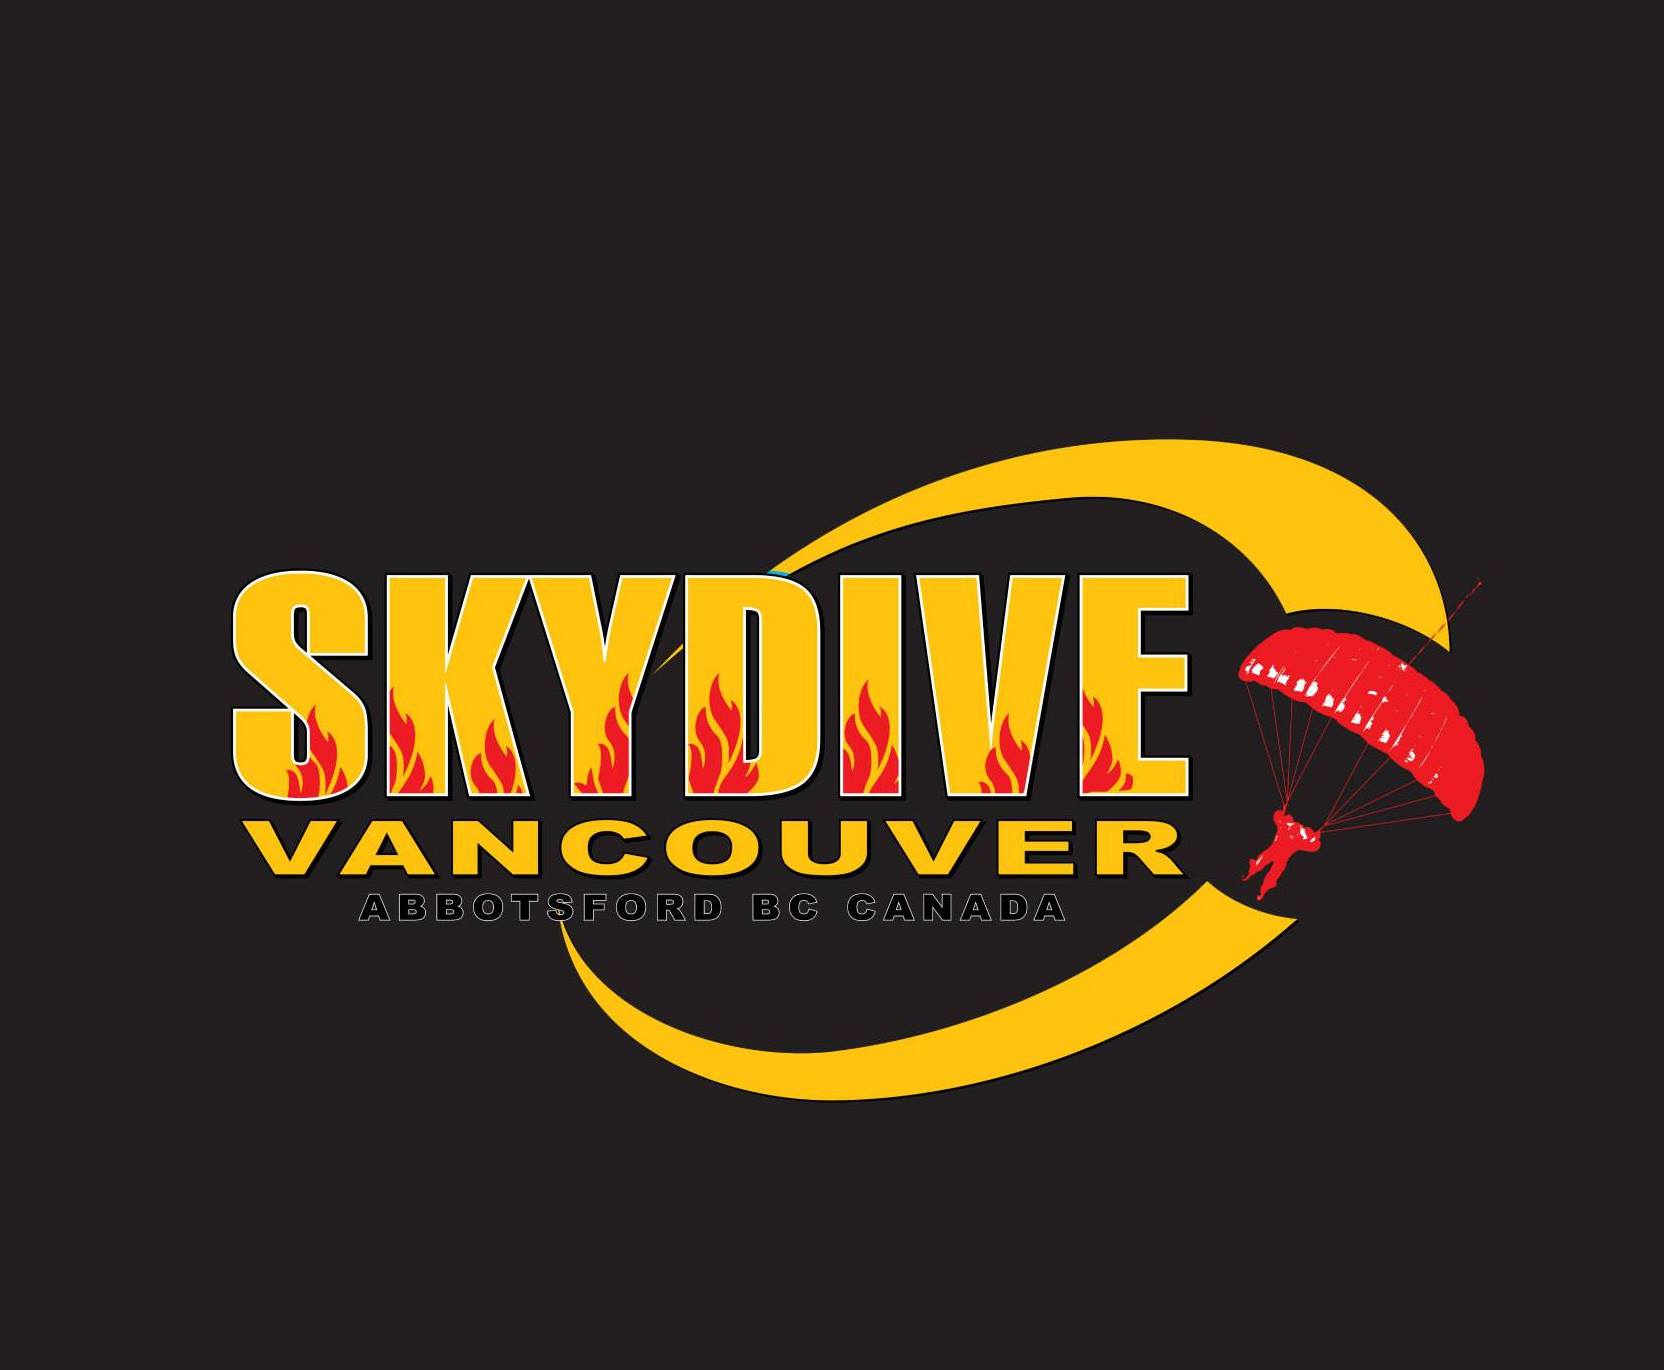 Skydive Vancouver logo